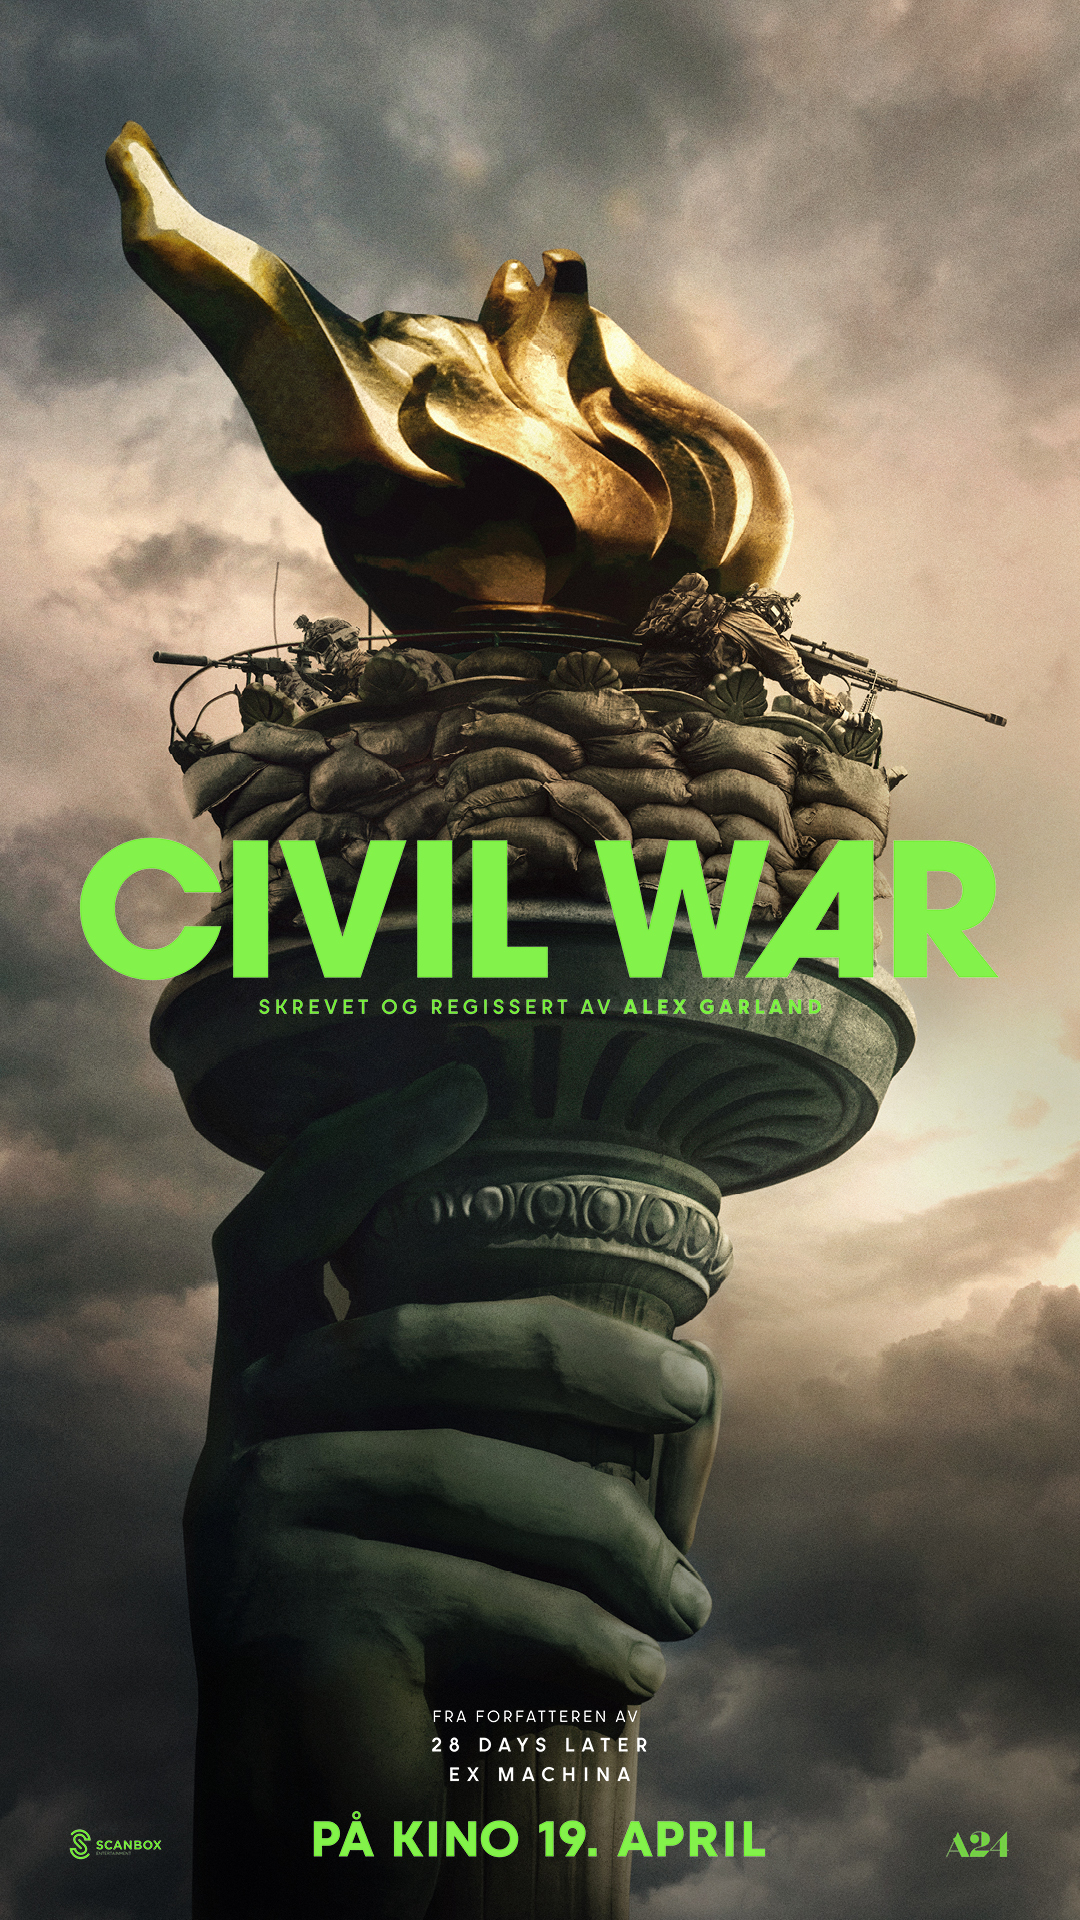 Kinoplakat for Civil War